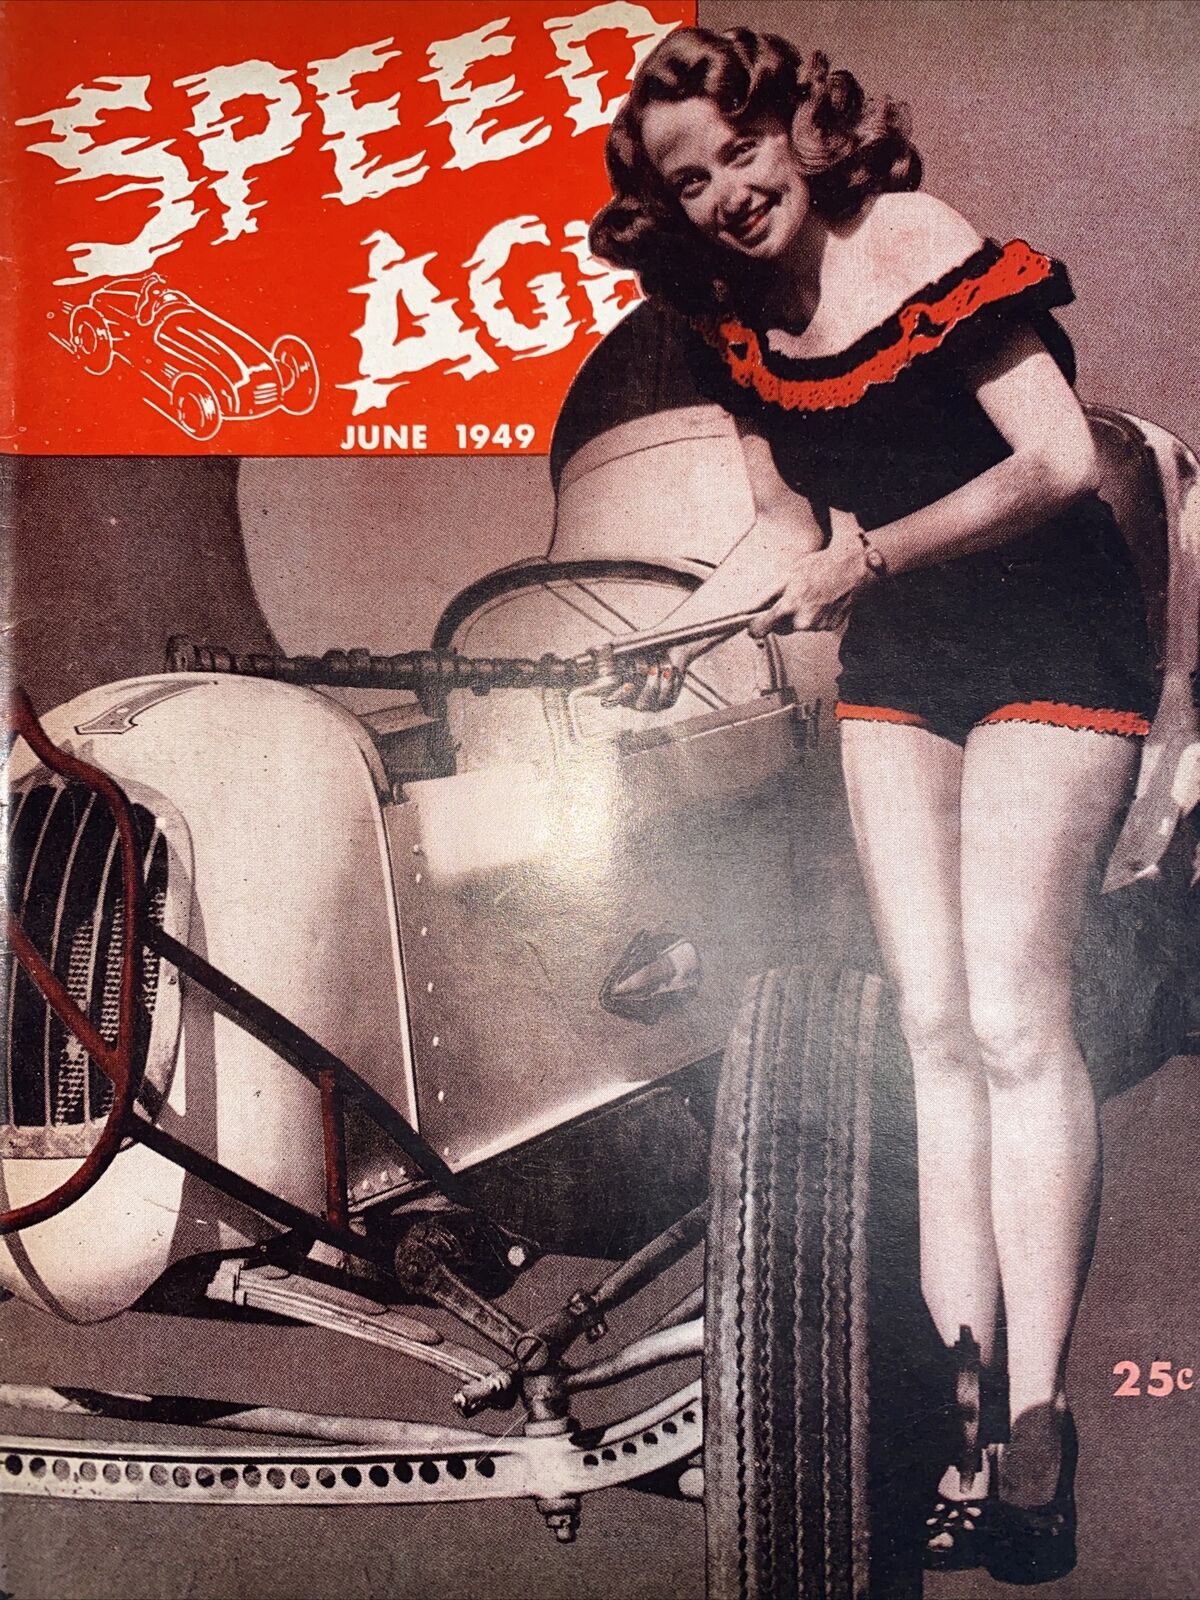 Speed Age June 1949